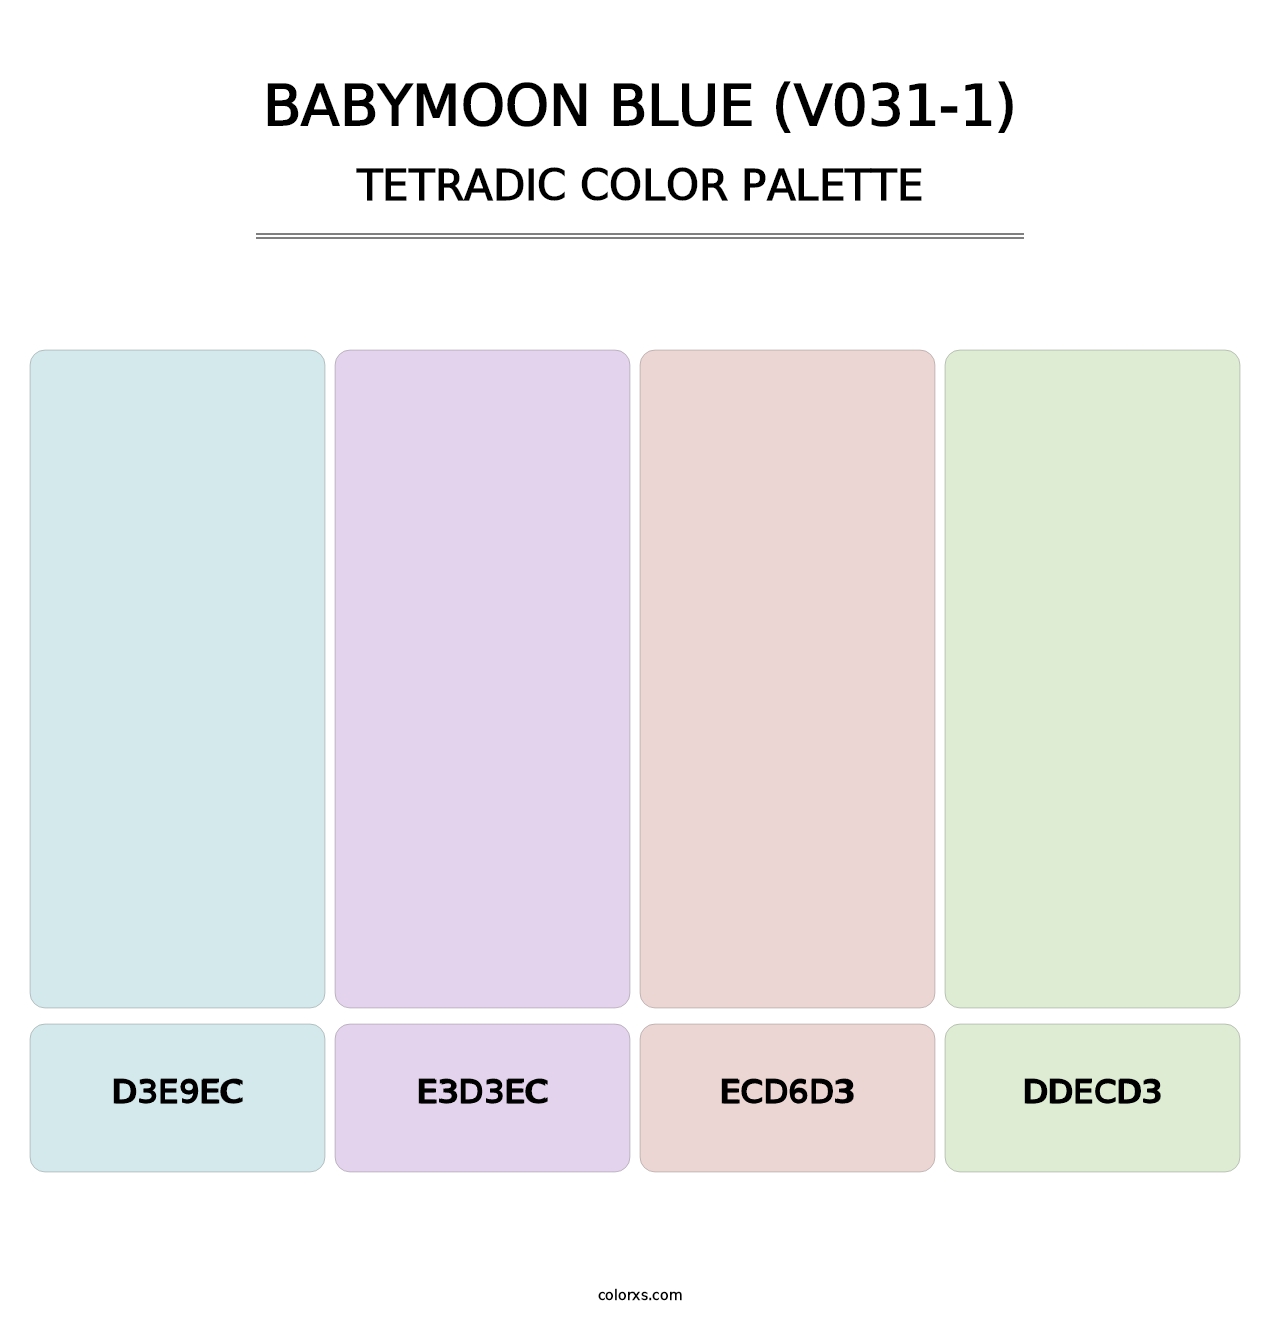 Babymoon Blue (V031-1) - Tetradic Color Palette